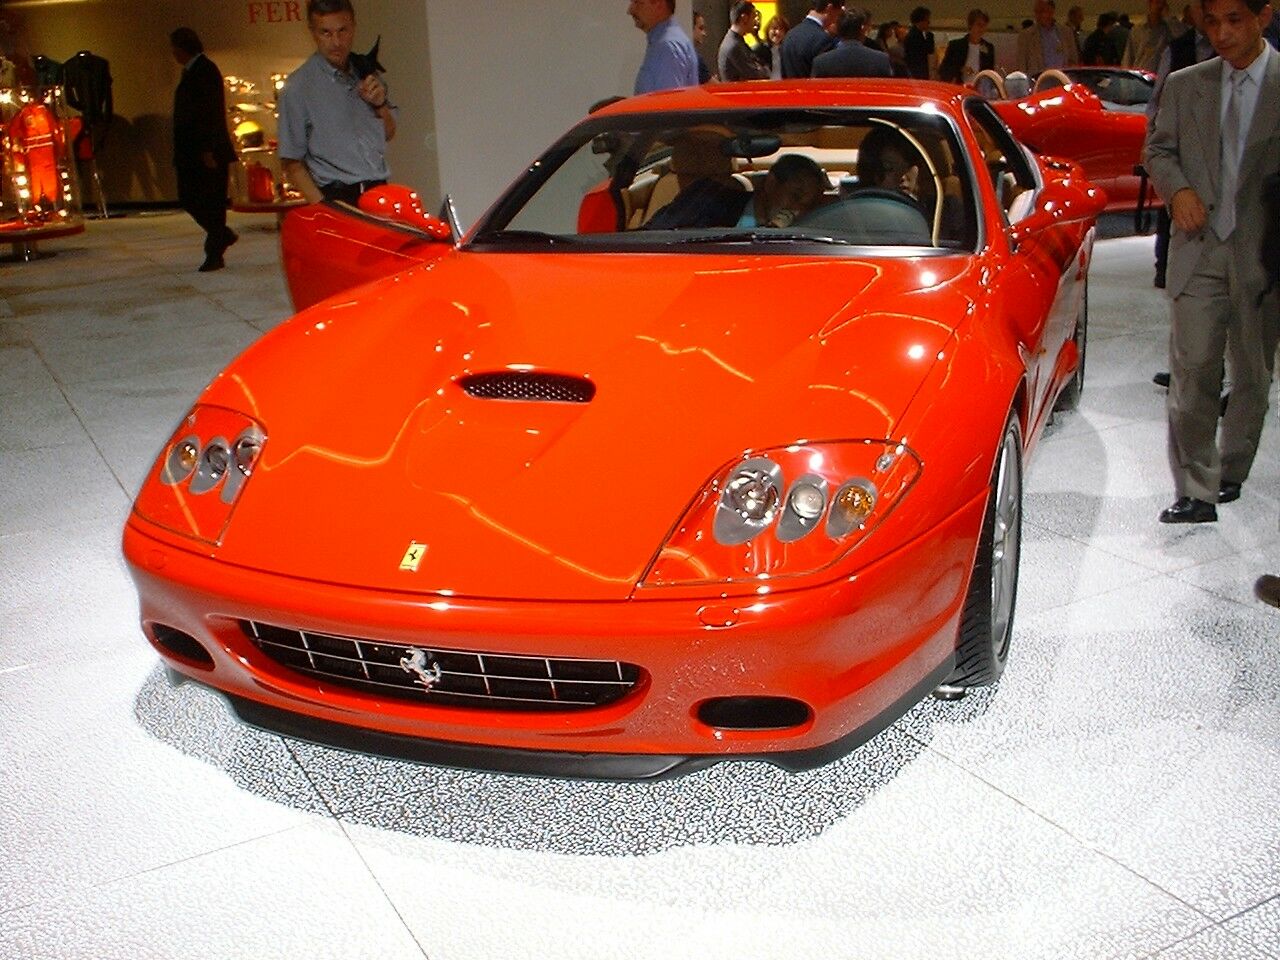 Ferrari 575M at the 2003 Frankfurt Motor Show